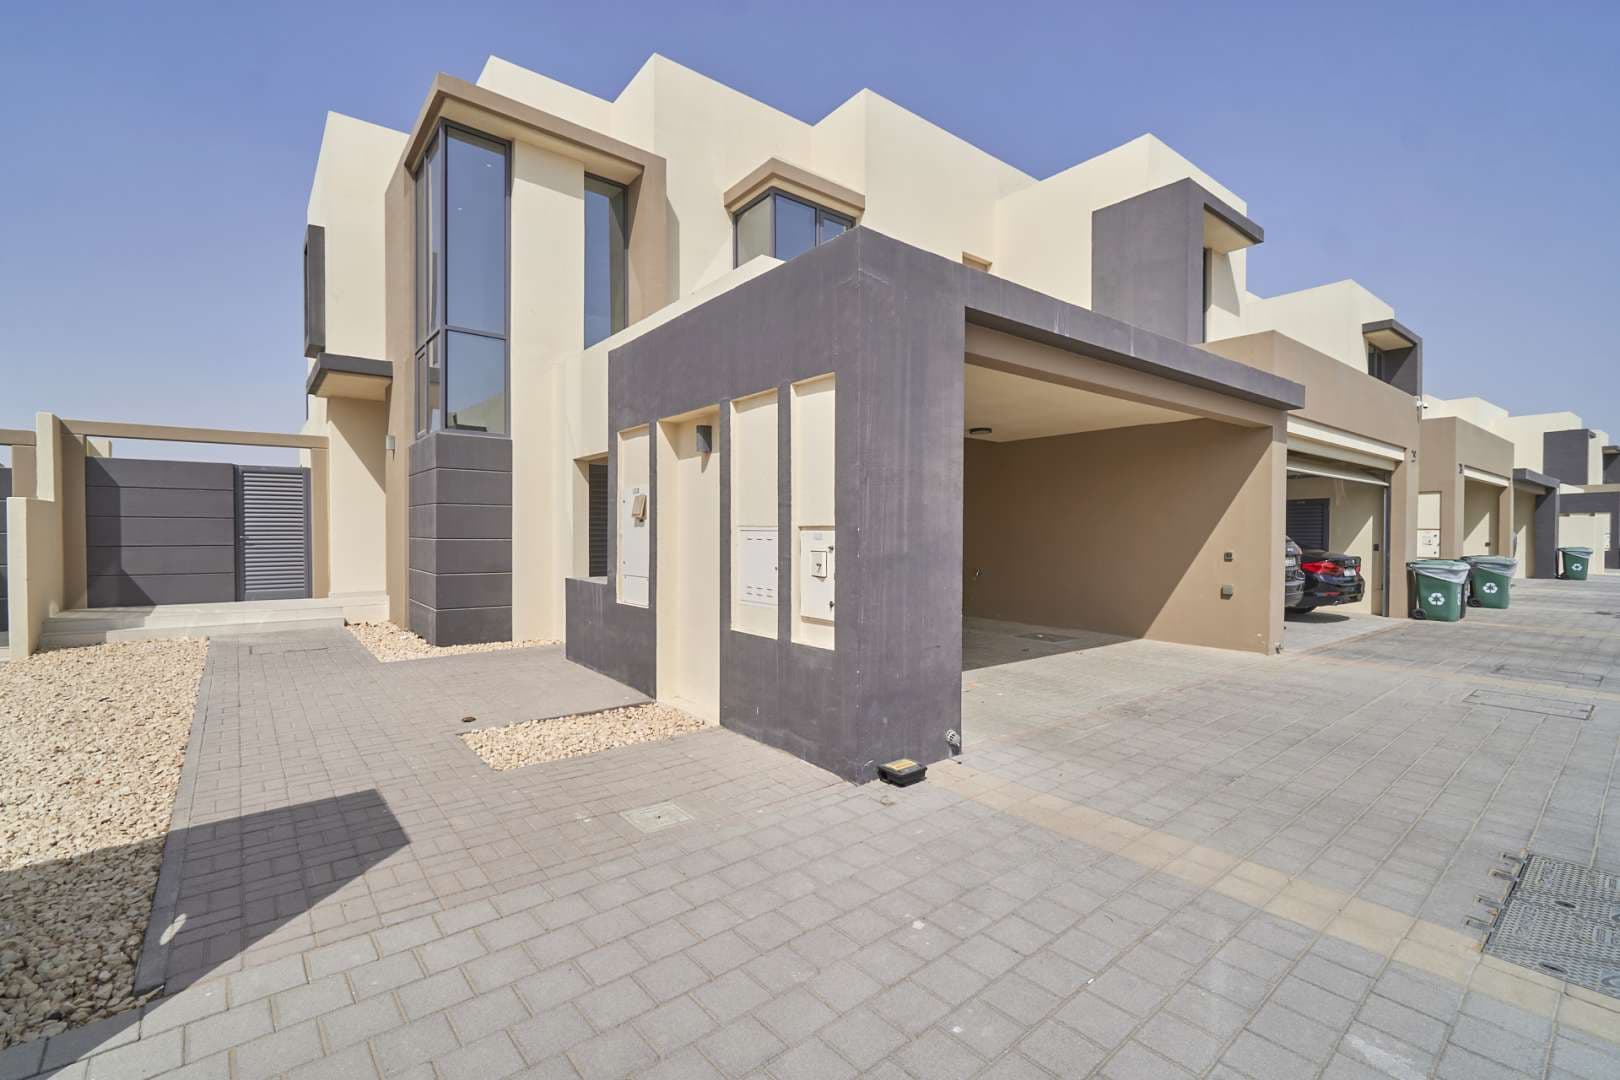 4 Bedroom Townhouse For Sale Maple At Dubai Hills Estate Lp08614 2dd9456ccfa52a00.jpg